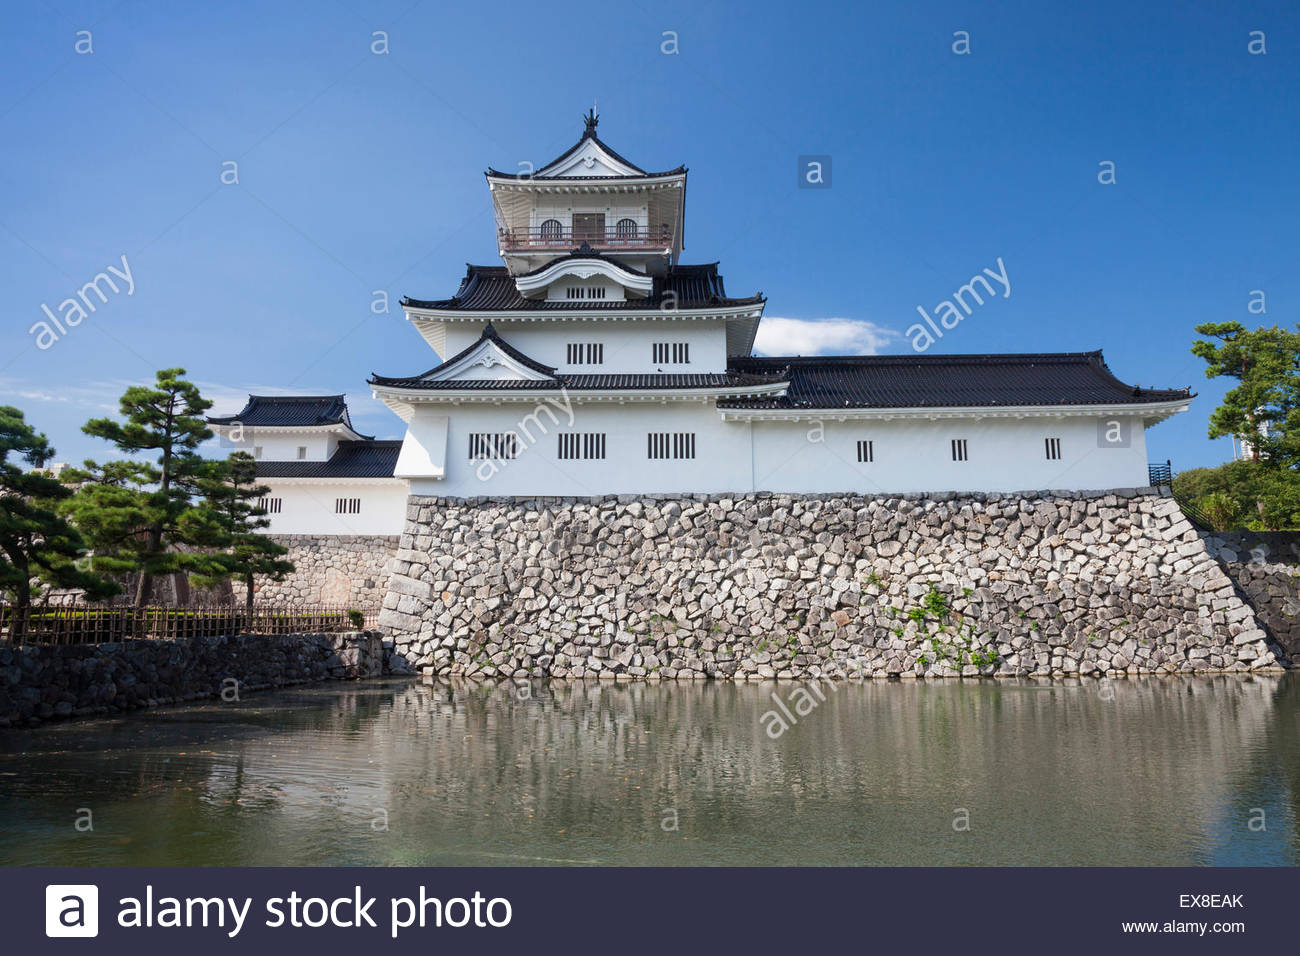 Amazing Toyama Castle Pictures & Backgrounds